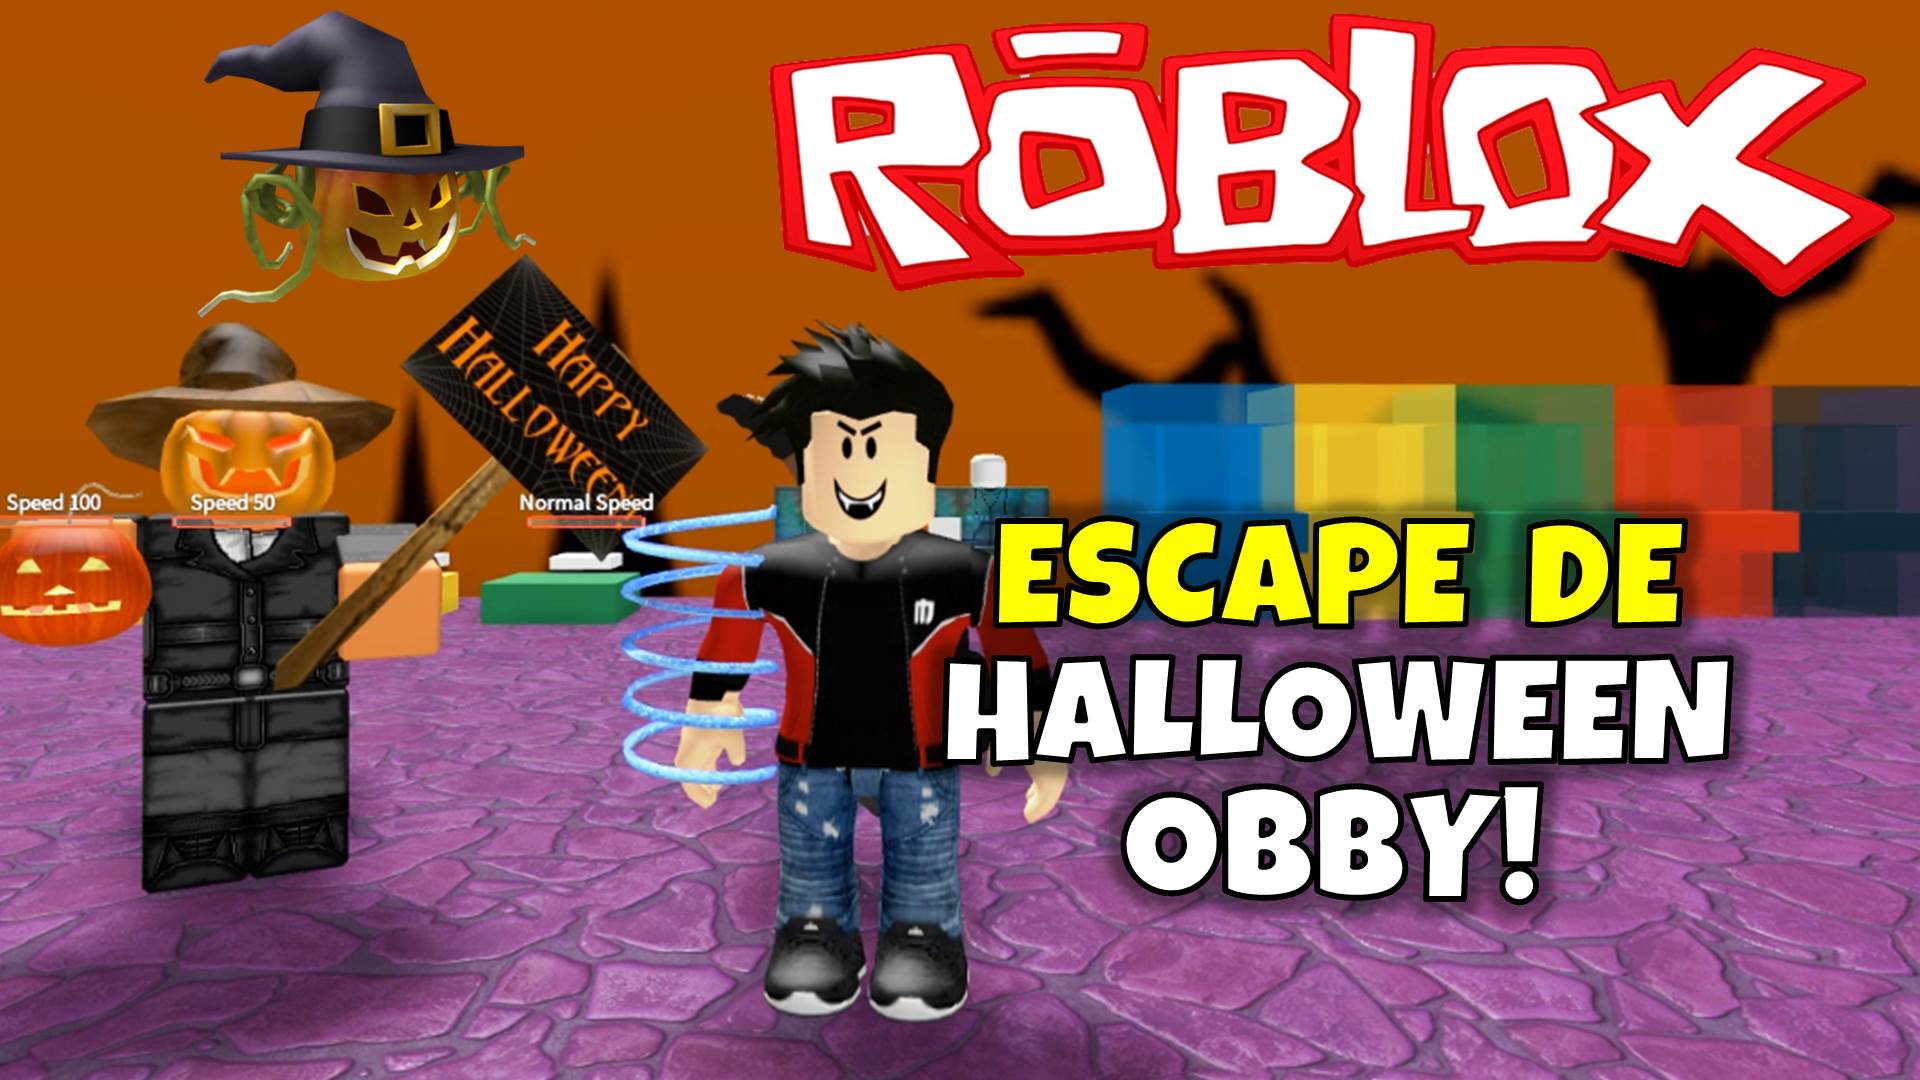 Rey Zerch On Twitter Roblox Escape De Halloween Obby Https T Co Fzczrdjqta Roblox Youtube Gameplay Escape Halloween - rey zerch roblox